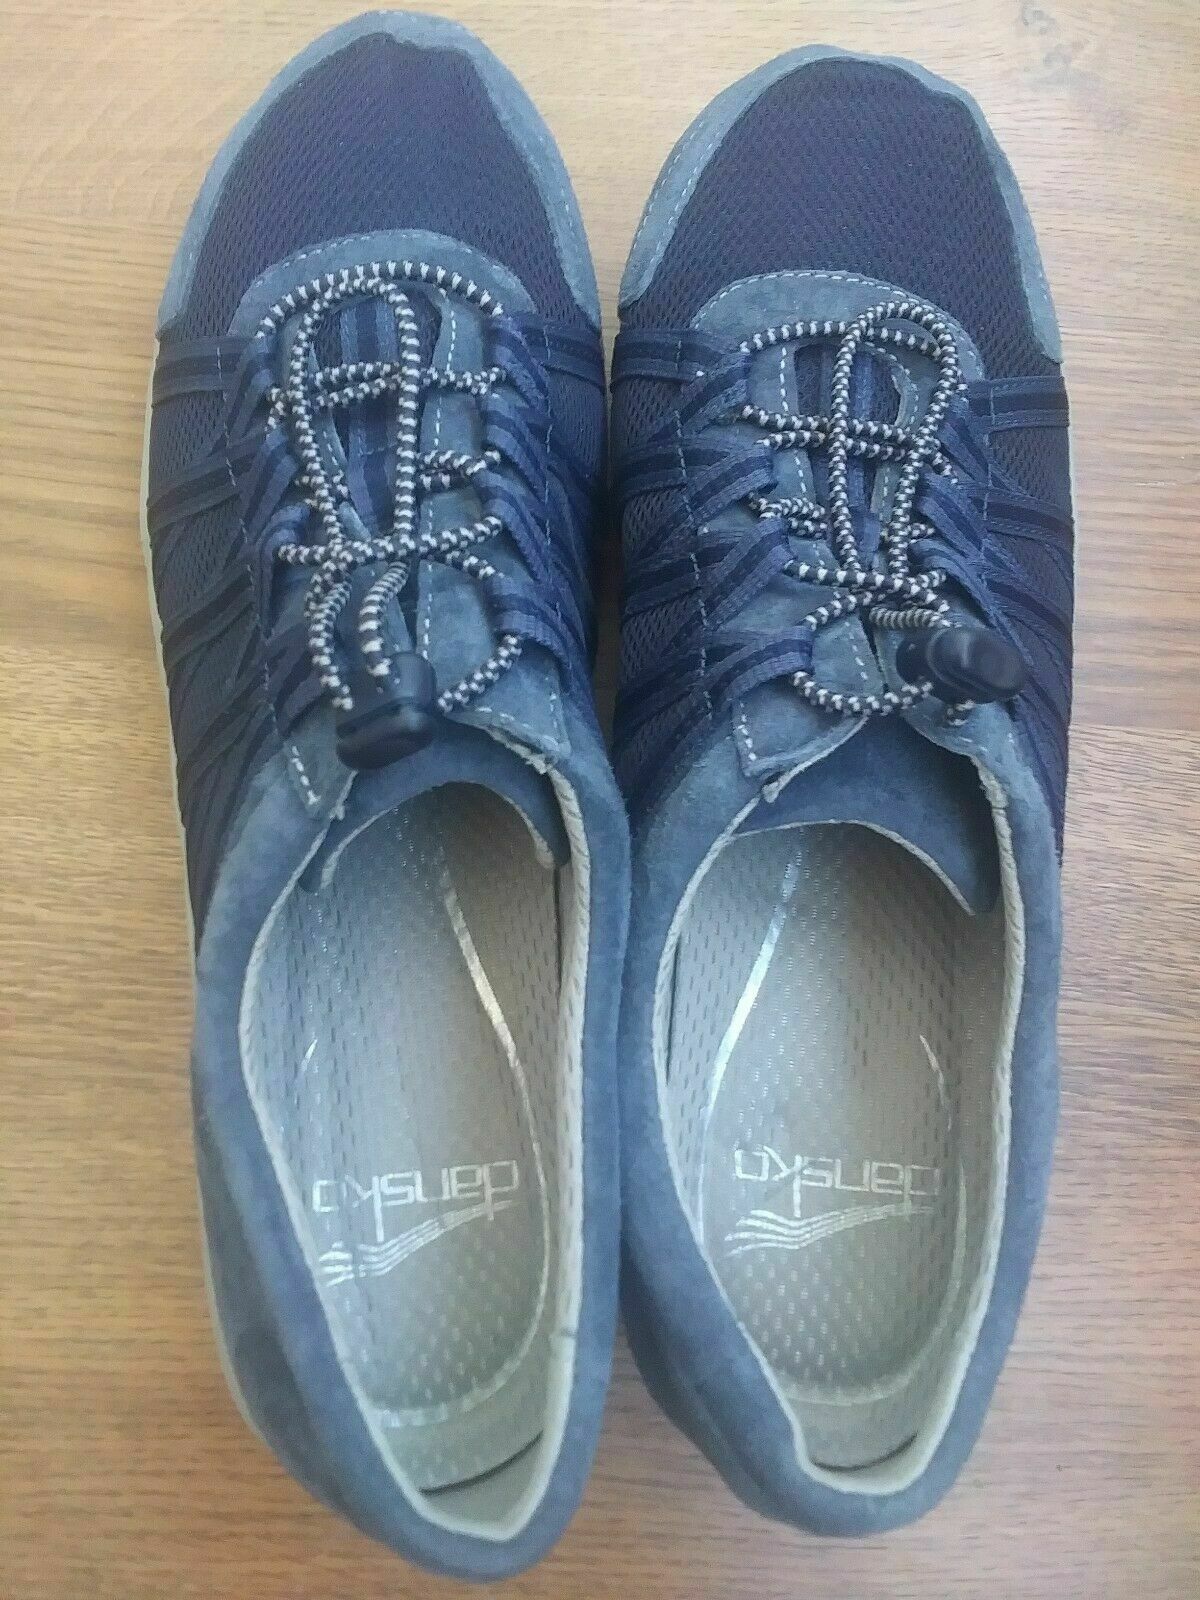 Dansko Walking Shoes Blue 41 EU 10 US Drawstring Laces HH - Occupational